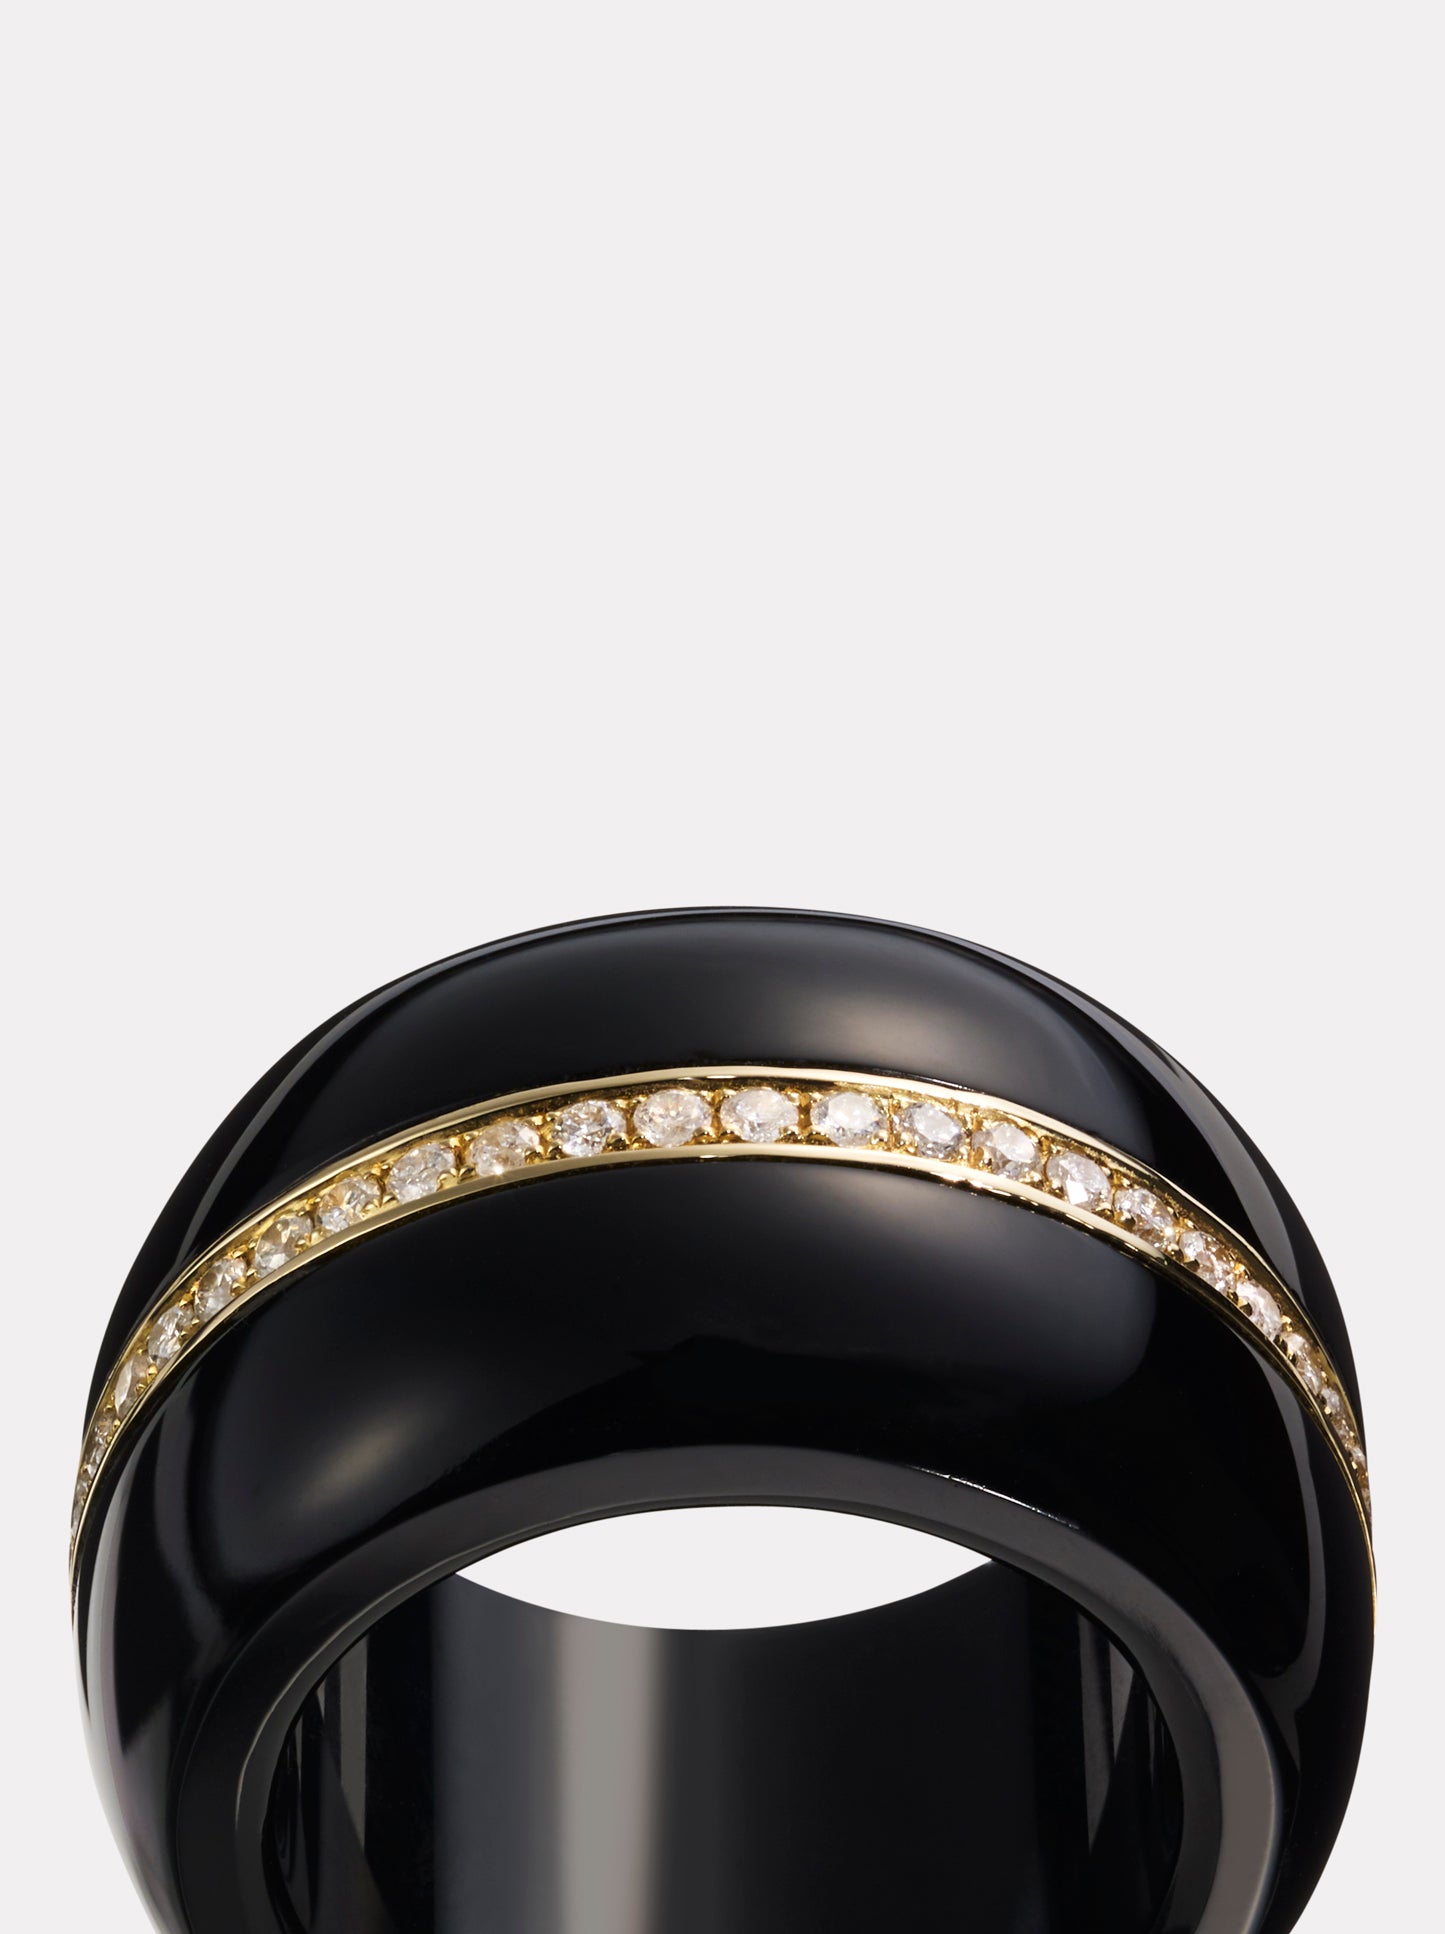 Diamond Pebble Cocktail Ring in Black Onyx